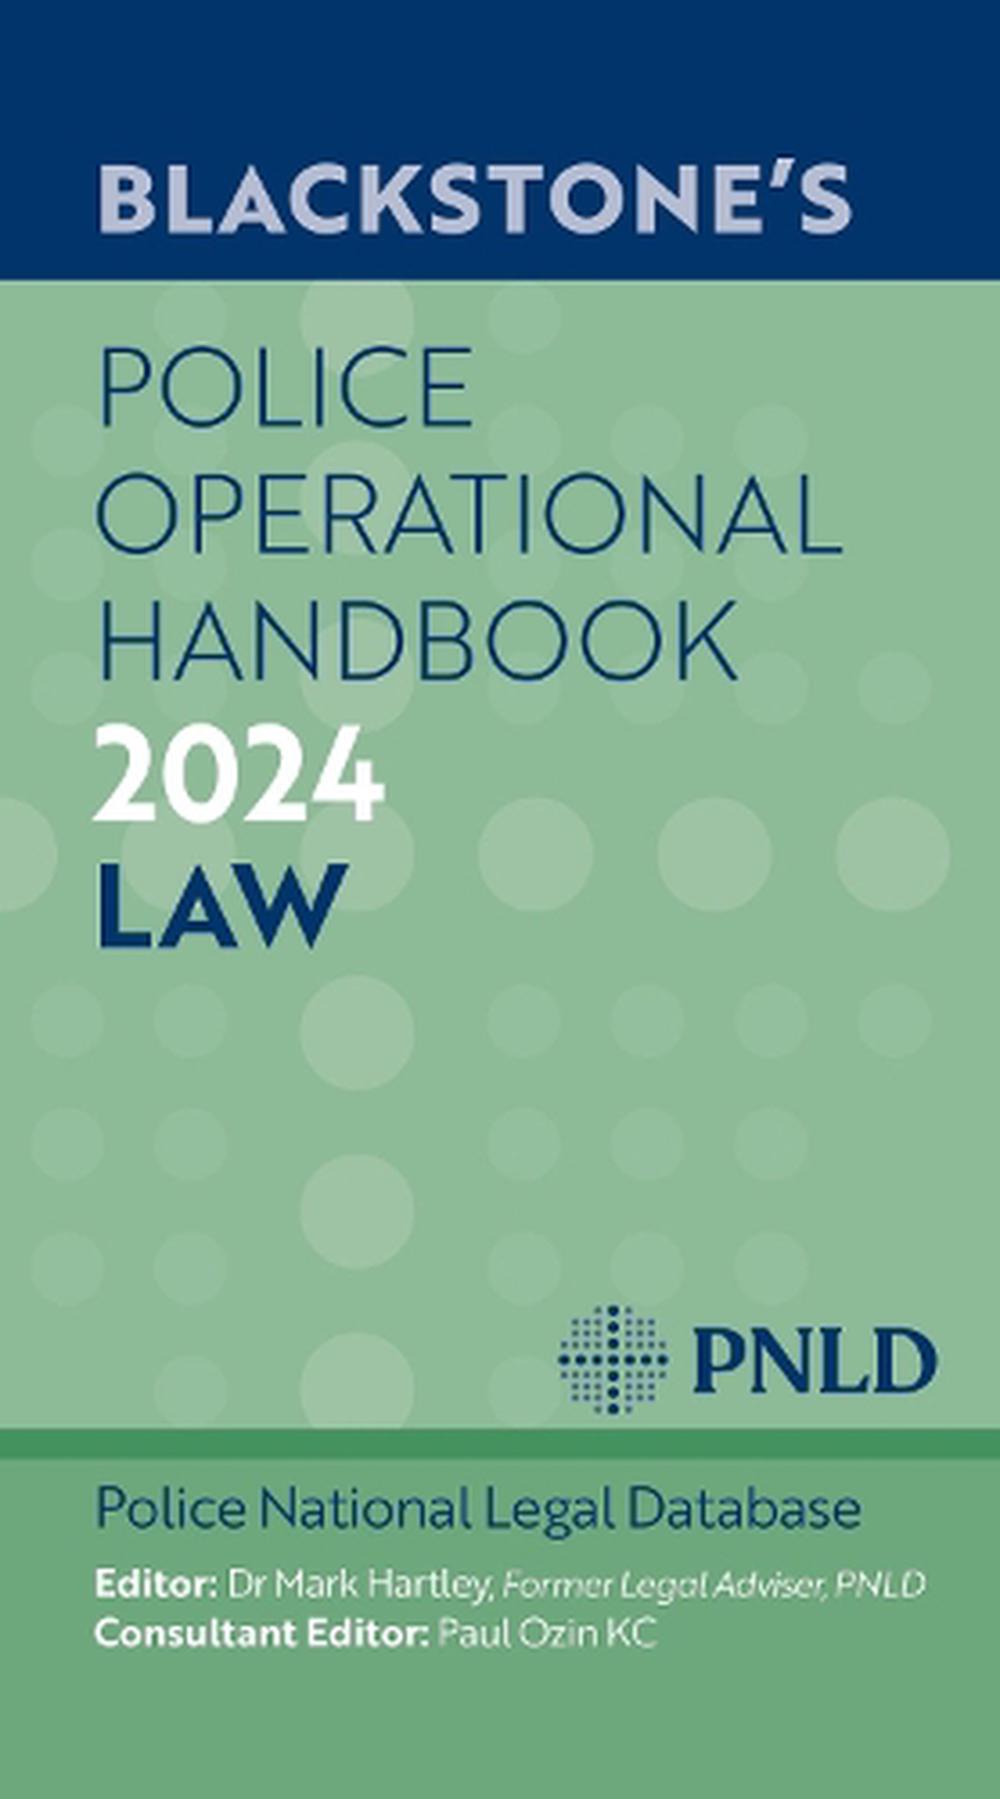 Blackstone's Police Operational Handbook 2024 by PNLD Police National